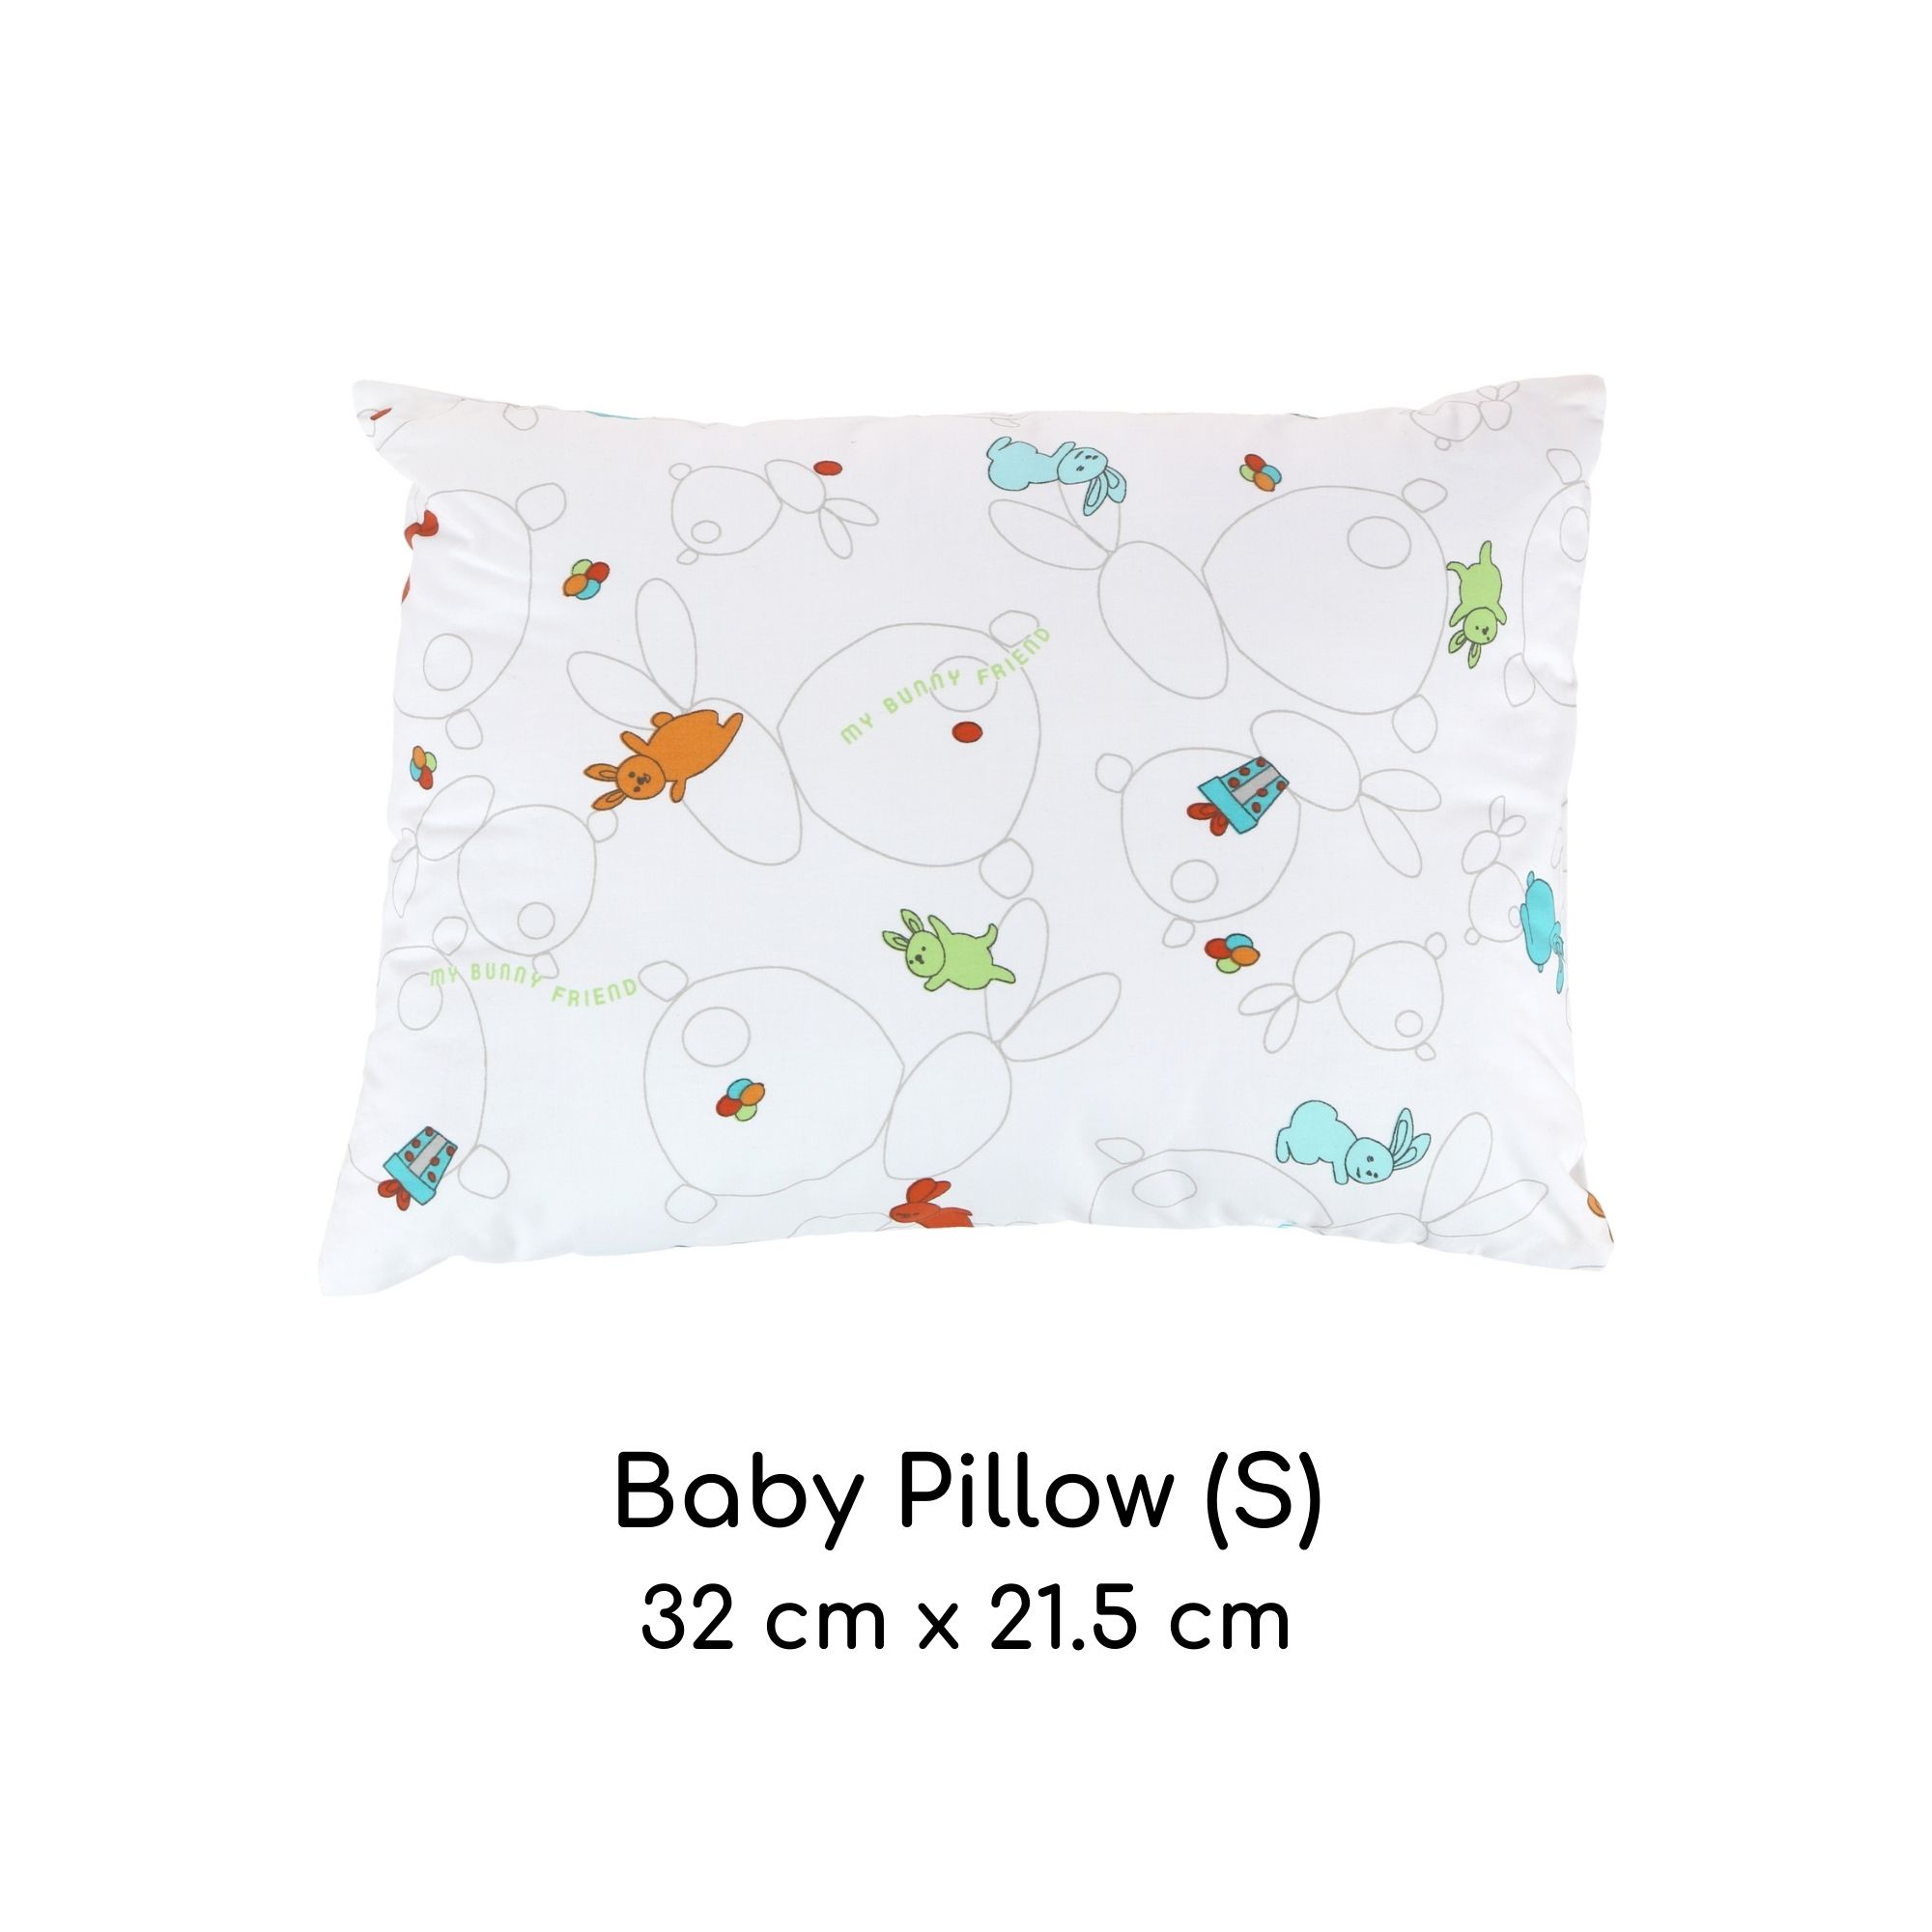 My Bunny Friend Baby Pillow (S) (21.5x32cm) - Bunny Party